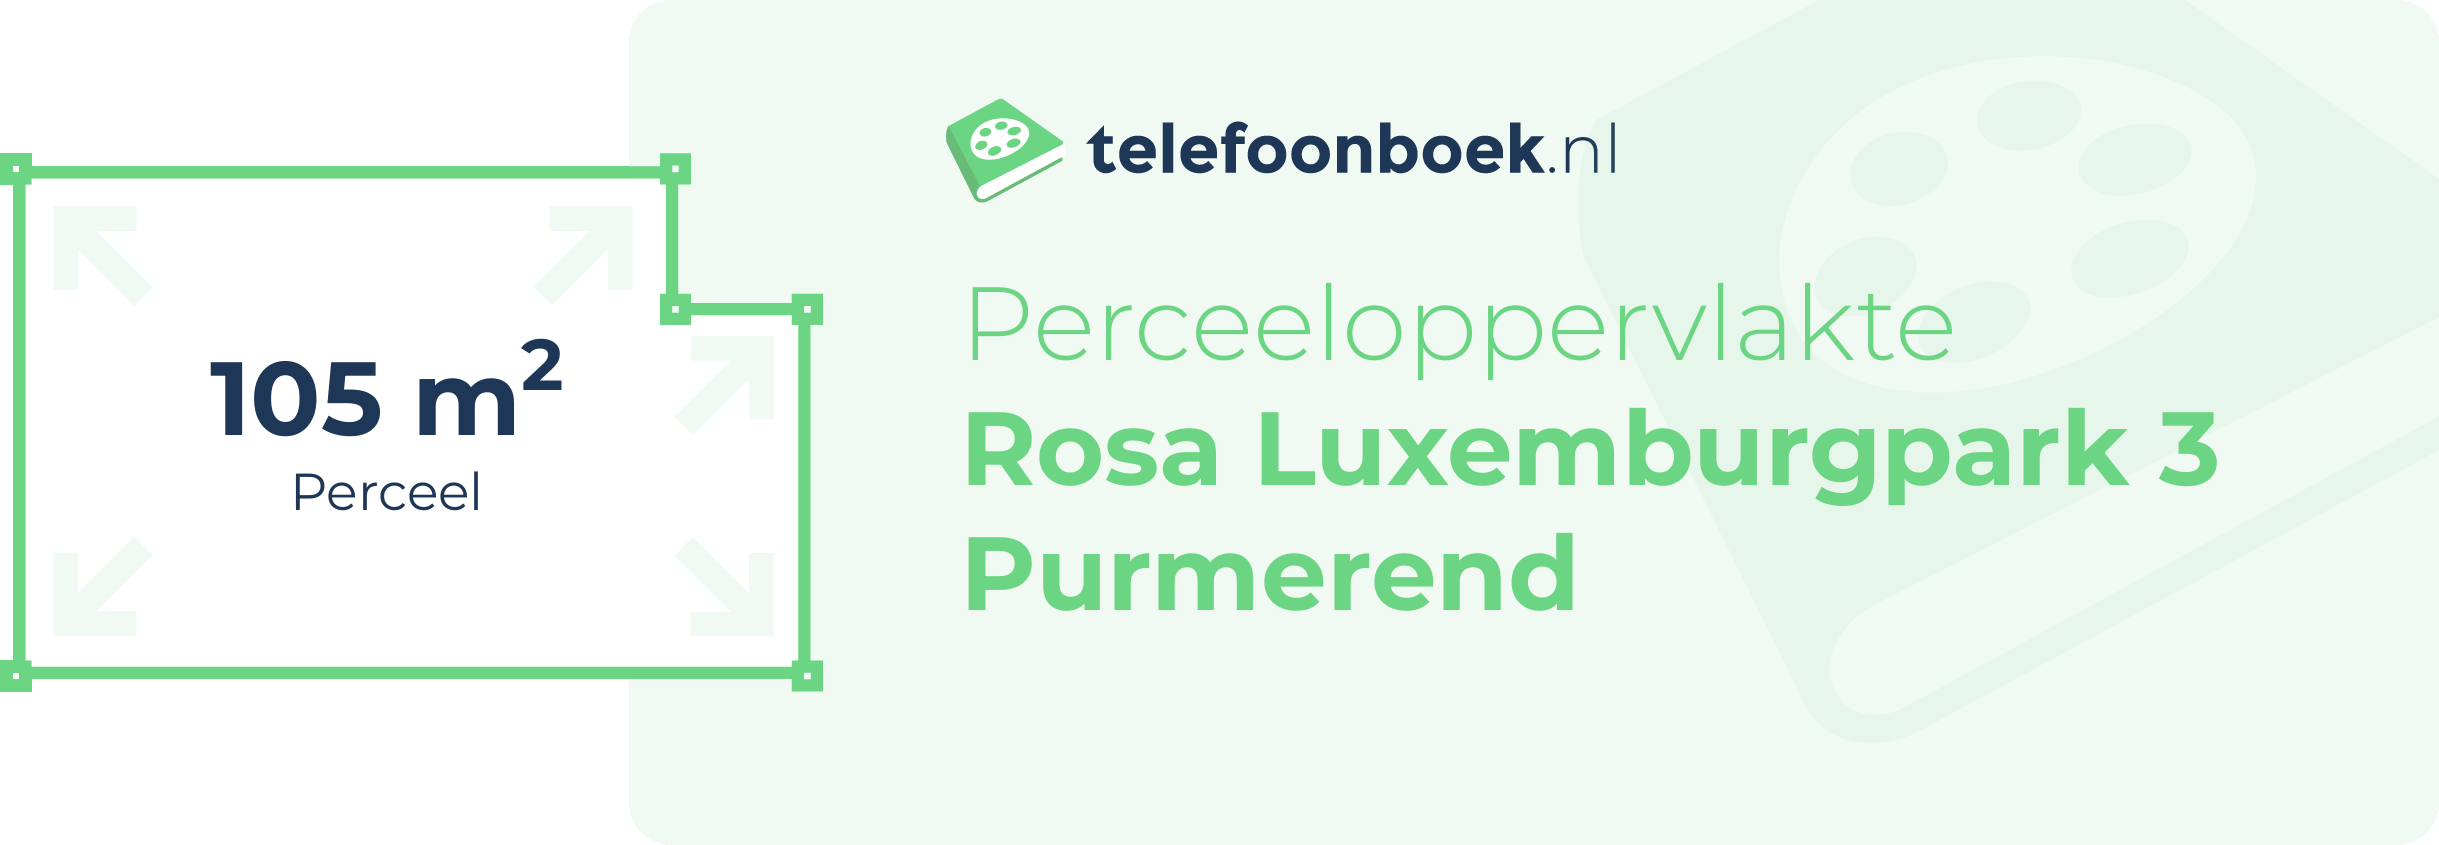 Perceeloppervlakte Rosa Luxemburgpark 3 Purmerend